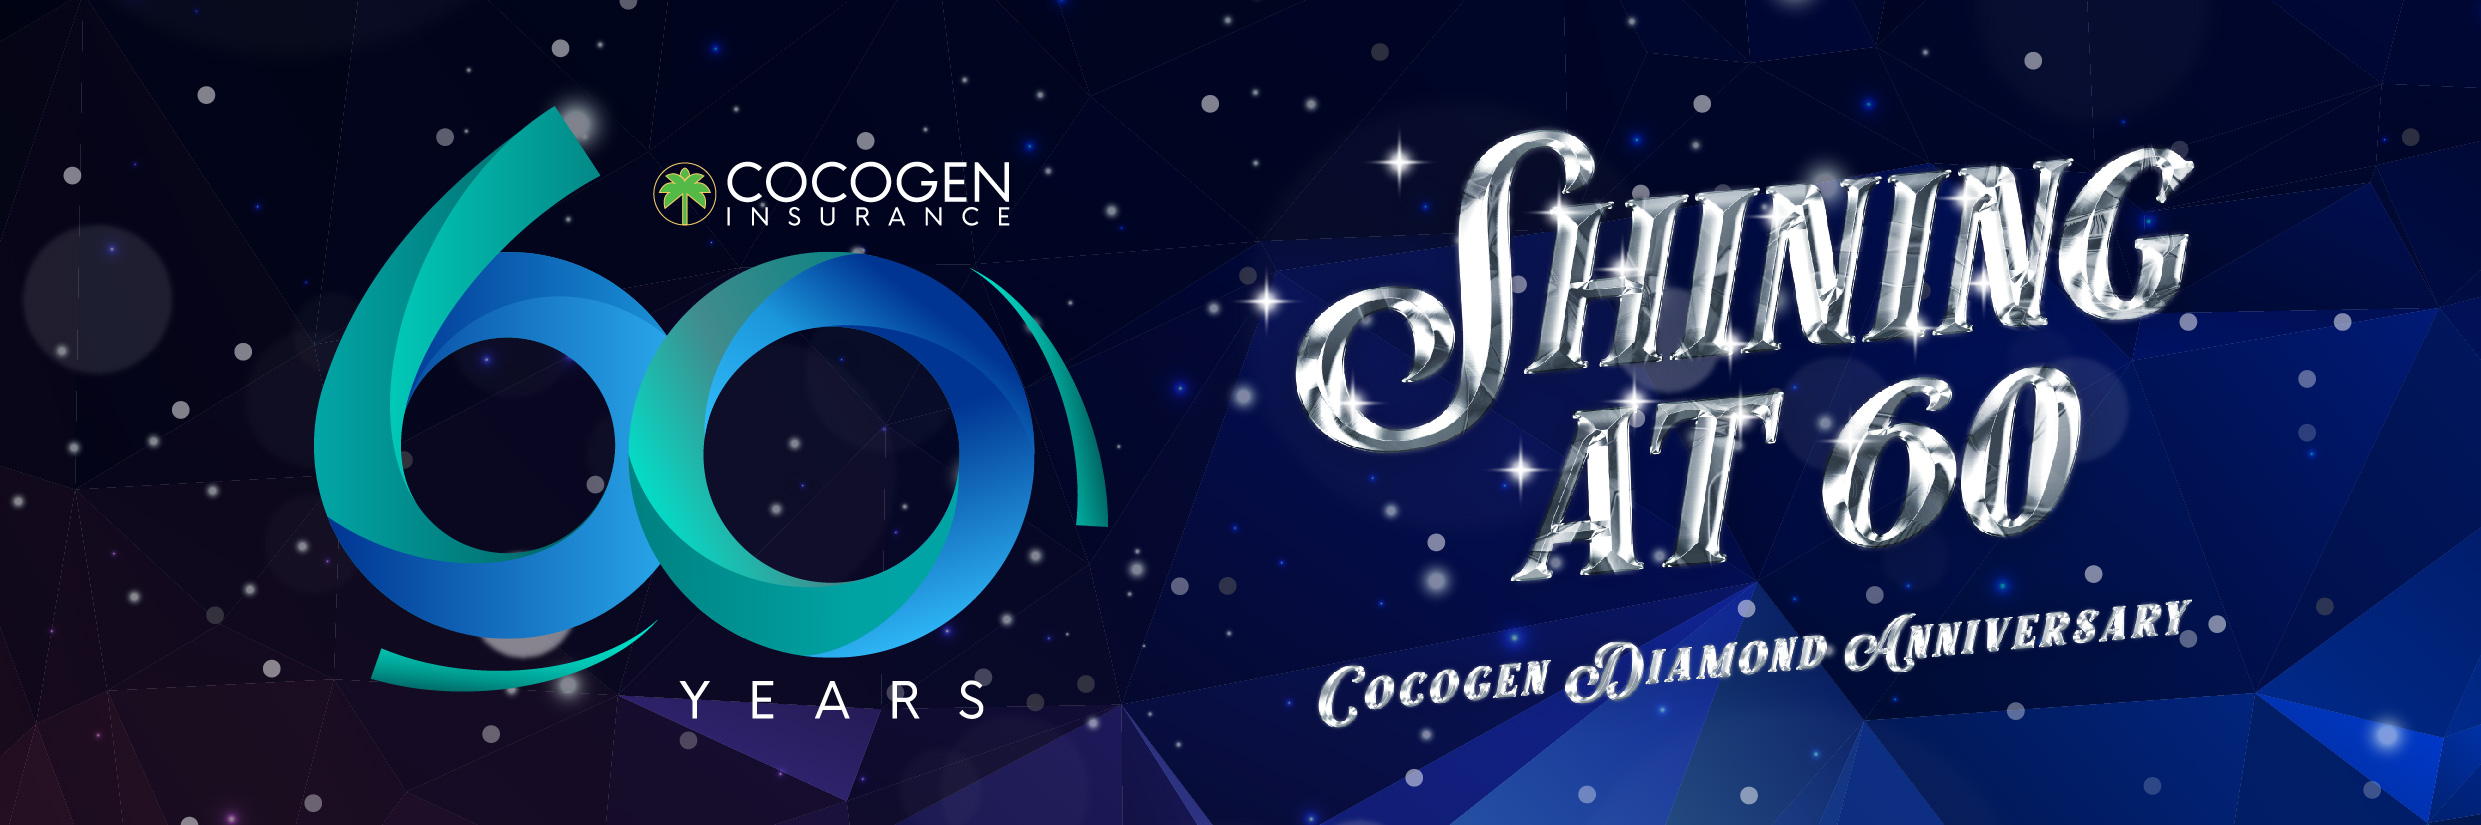 Shining at 60: Cocogen Diamond Anniversary